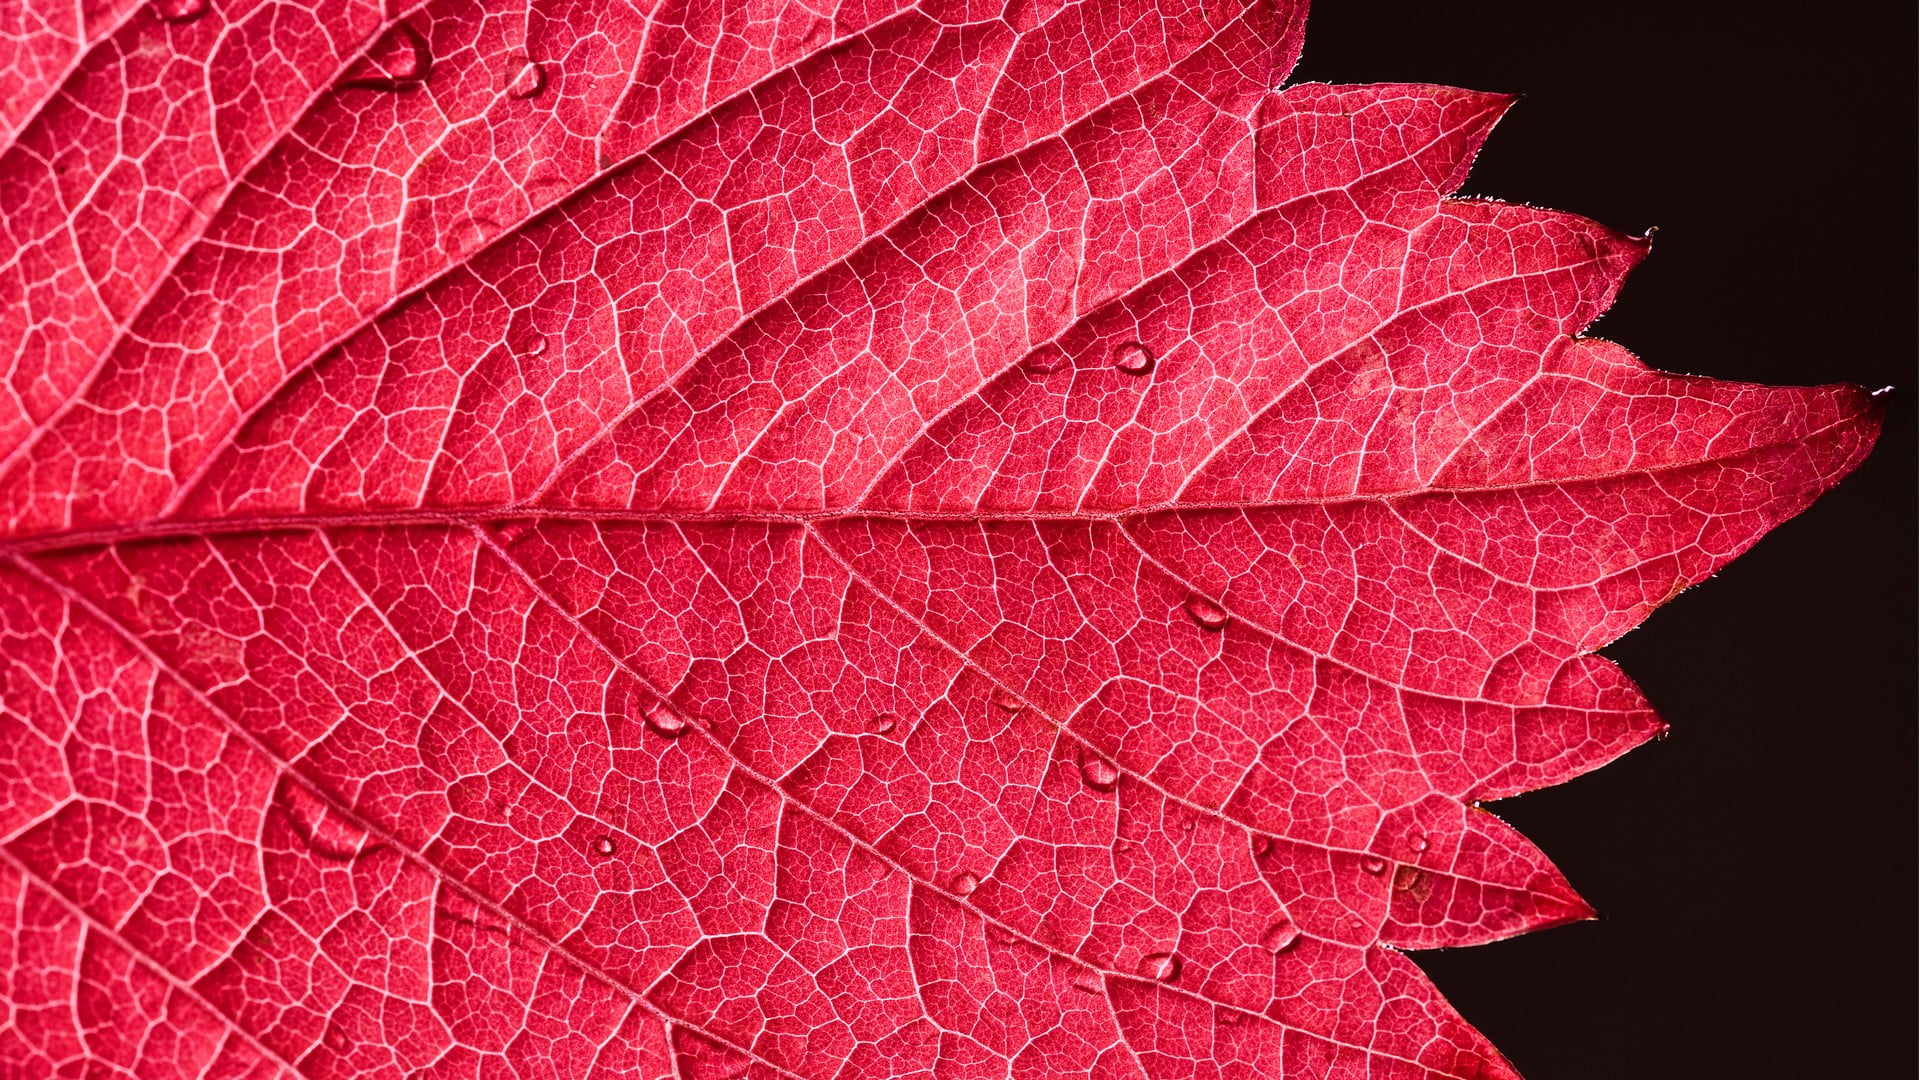 Red Leaf Leaves Water Drops Plants Hd Wallpaper Wallpaper Flare